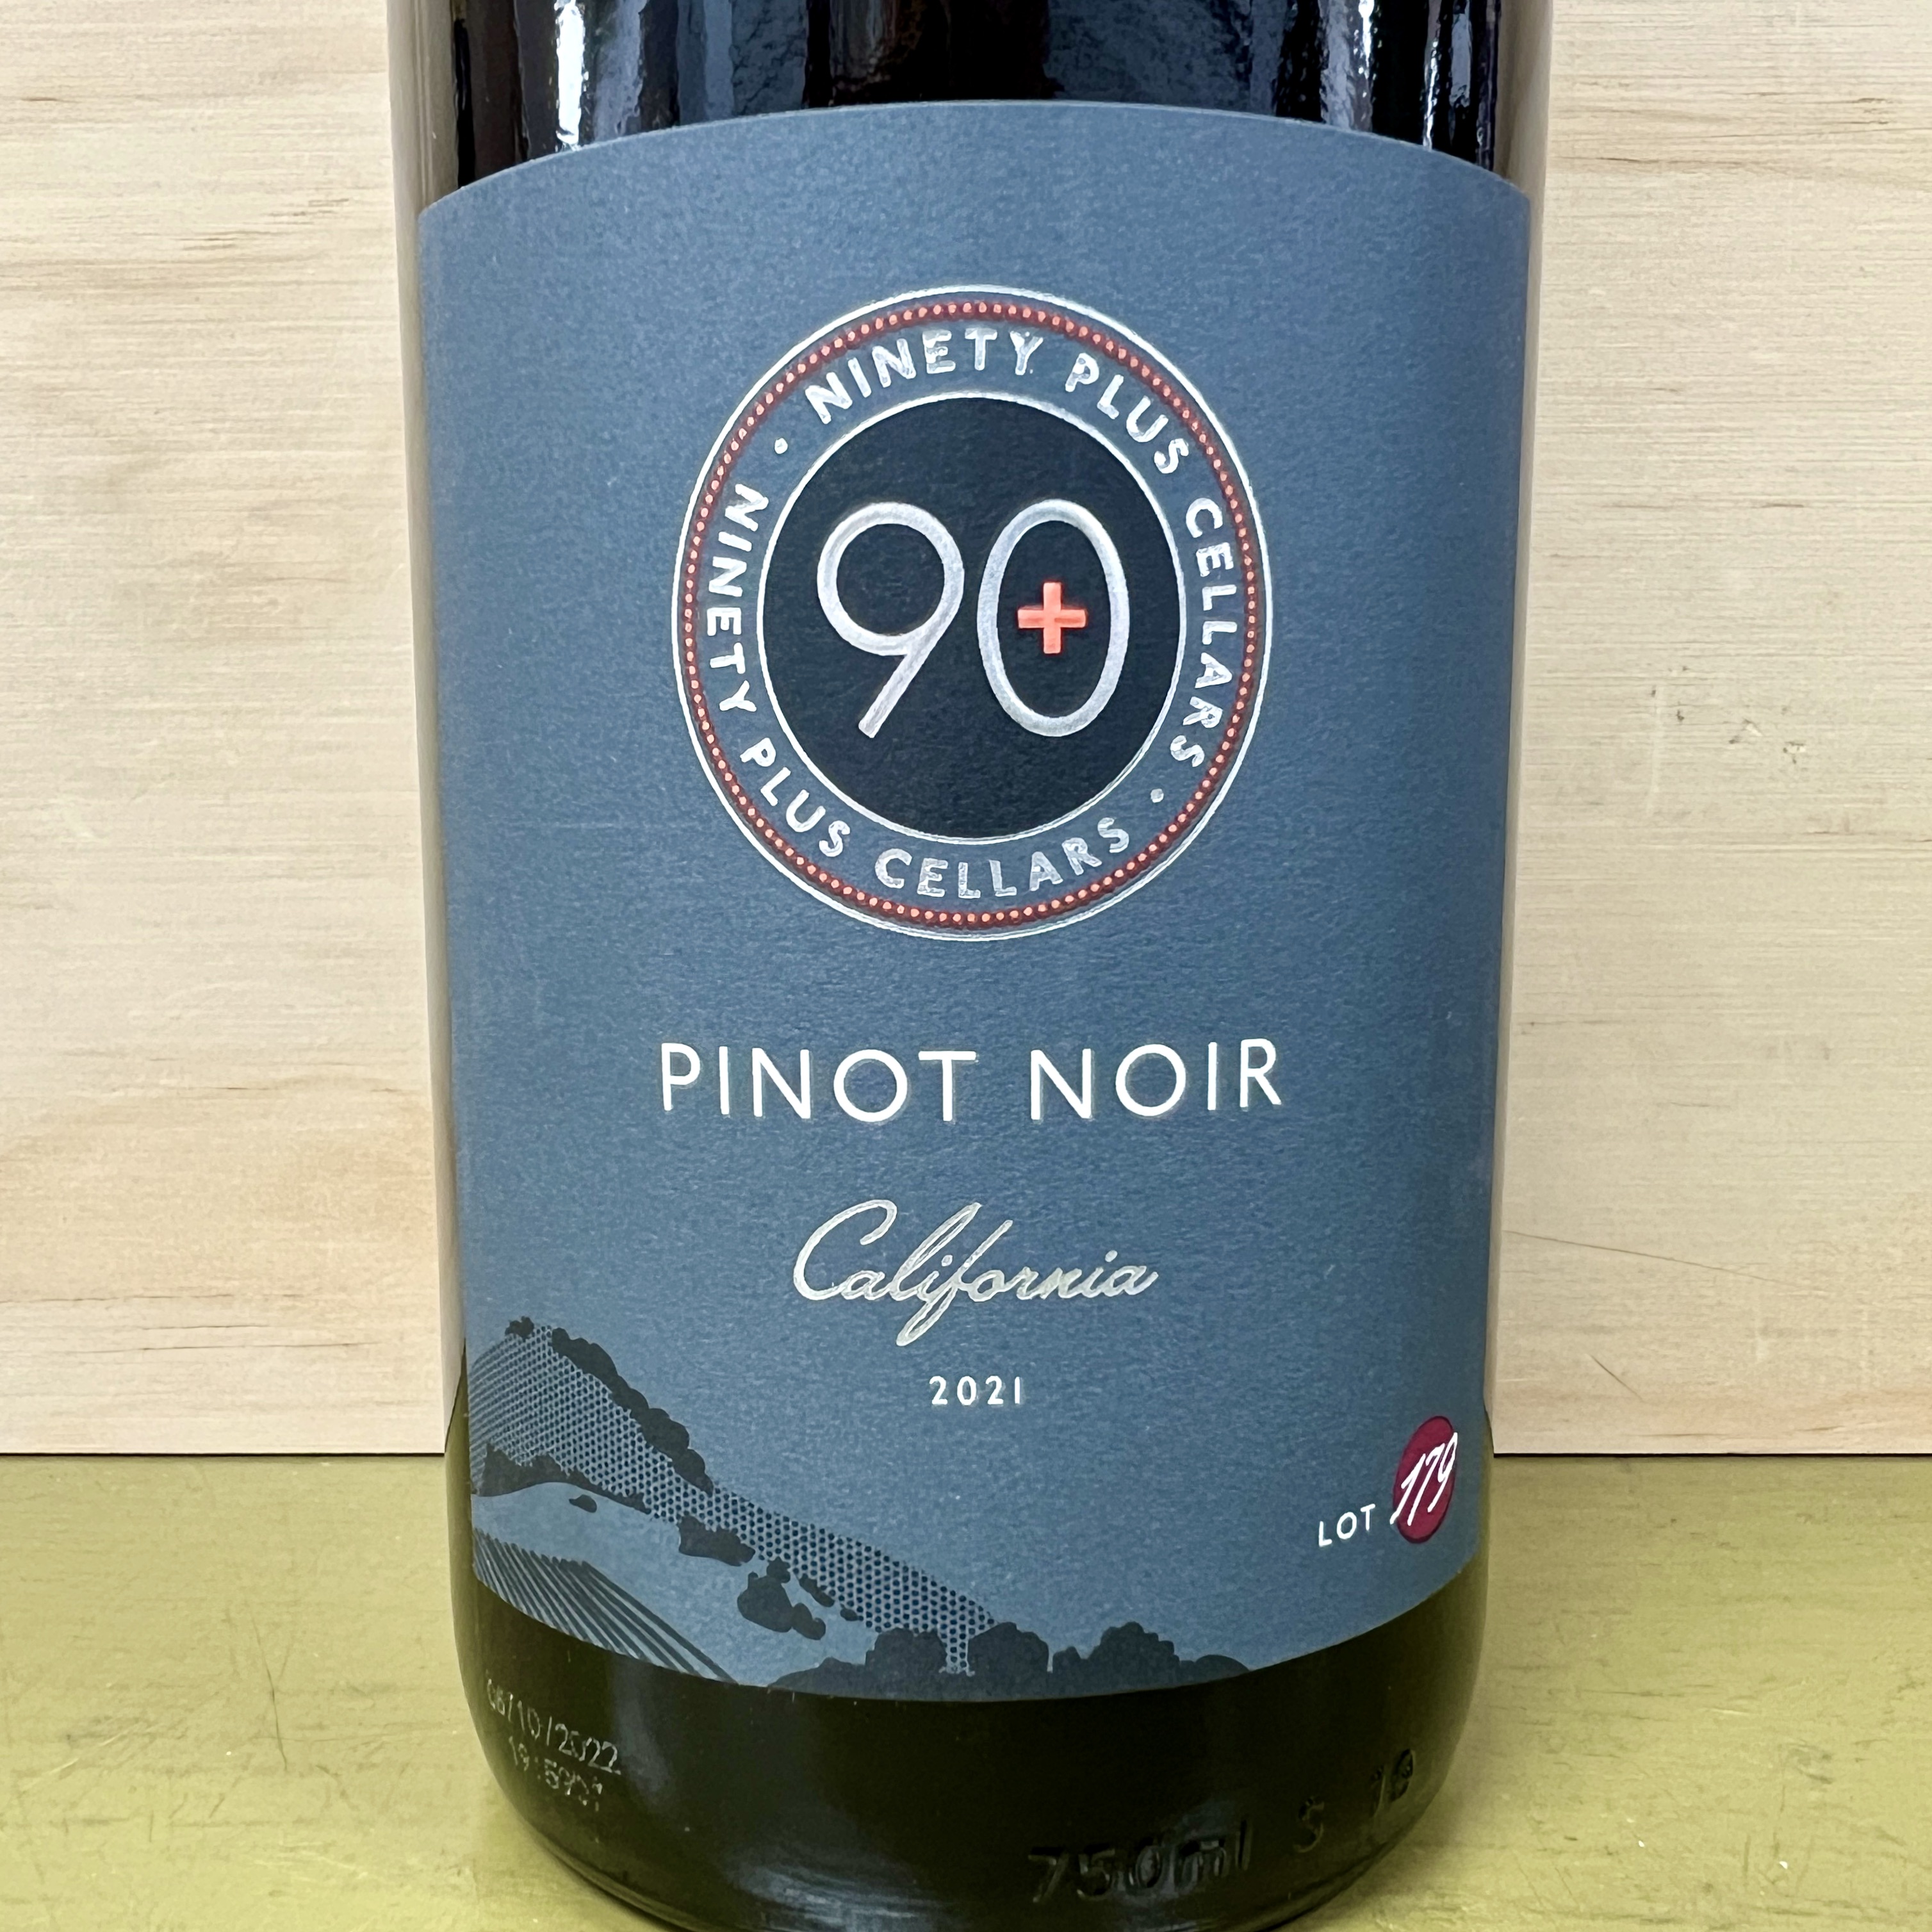 90+ Cellars Pinot Noir California 2021